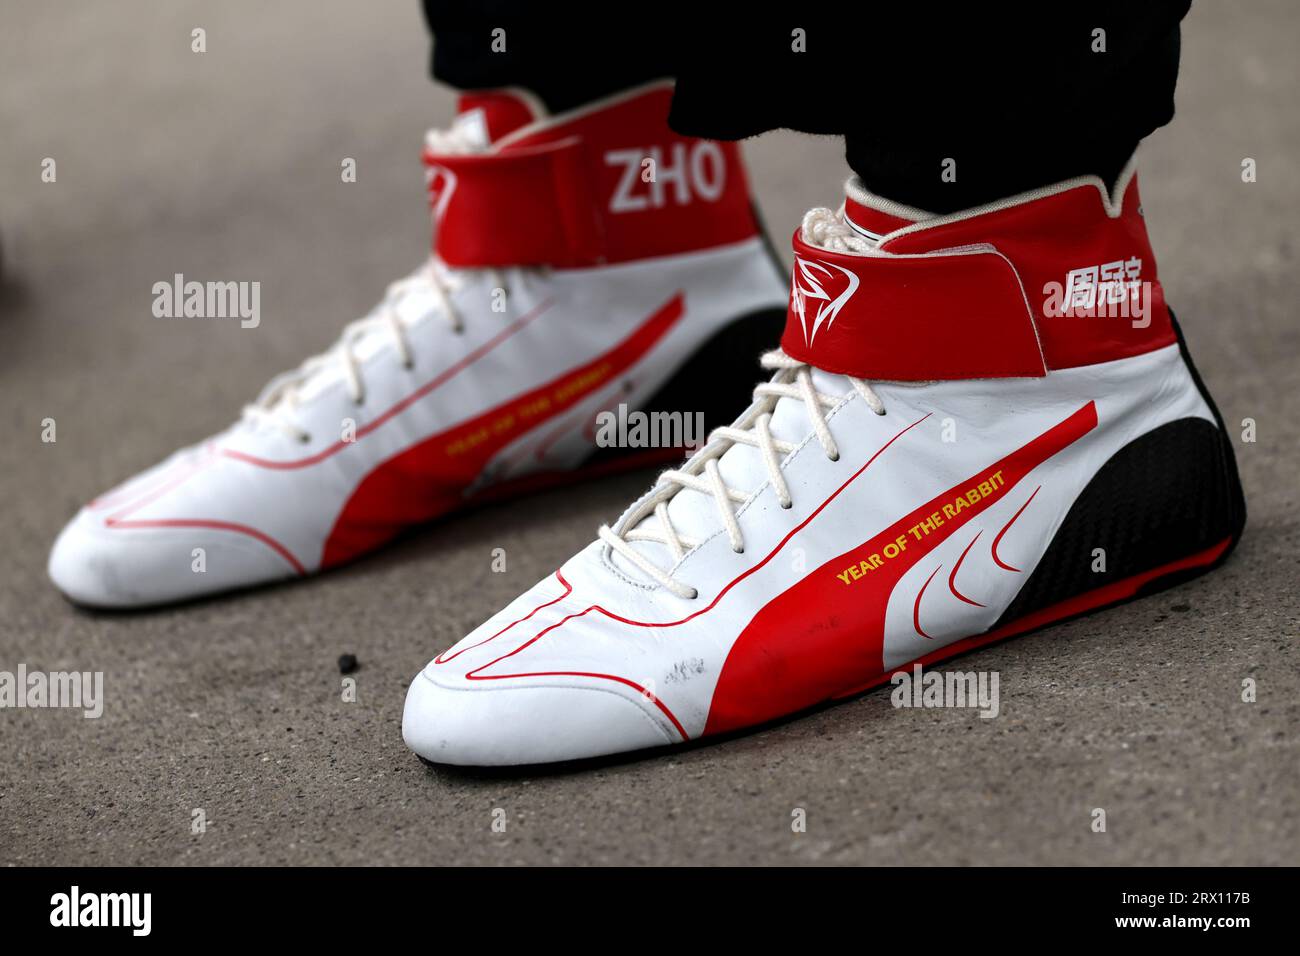 Alfa romeo racing racing boots hi-res stock photography and images - Alamy